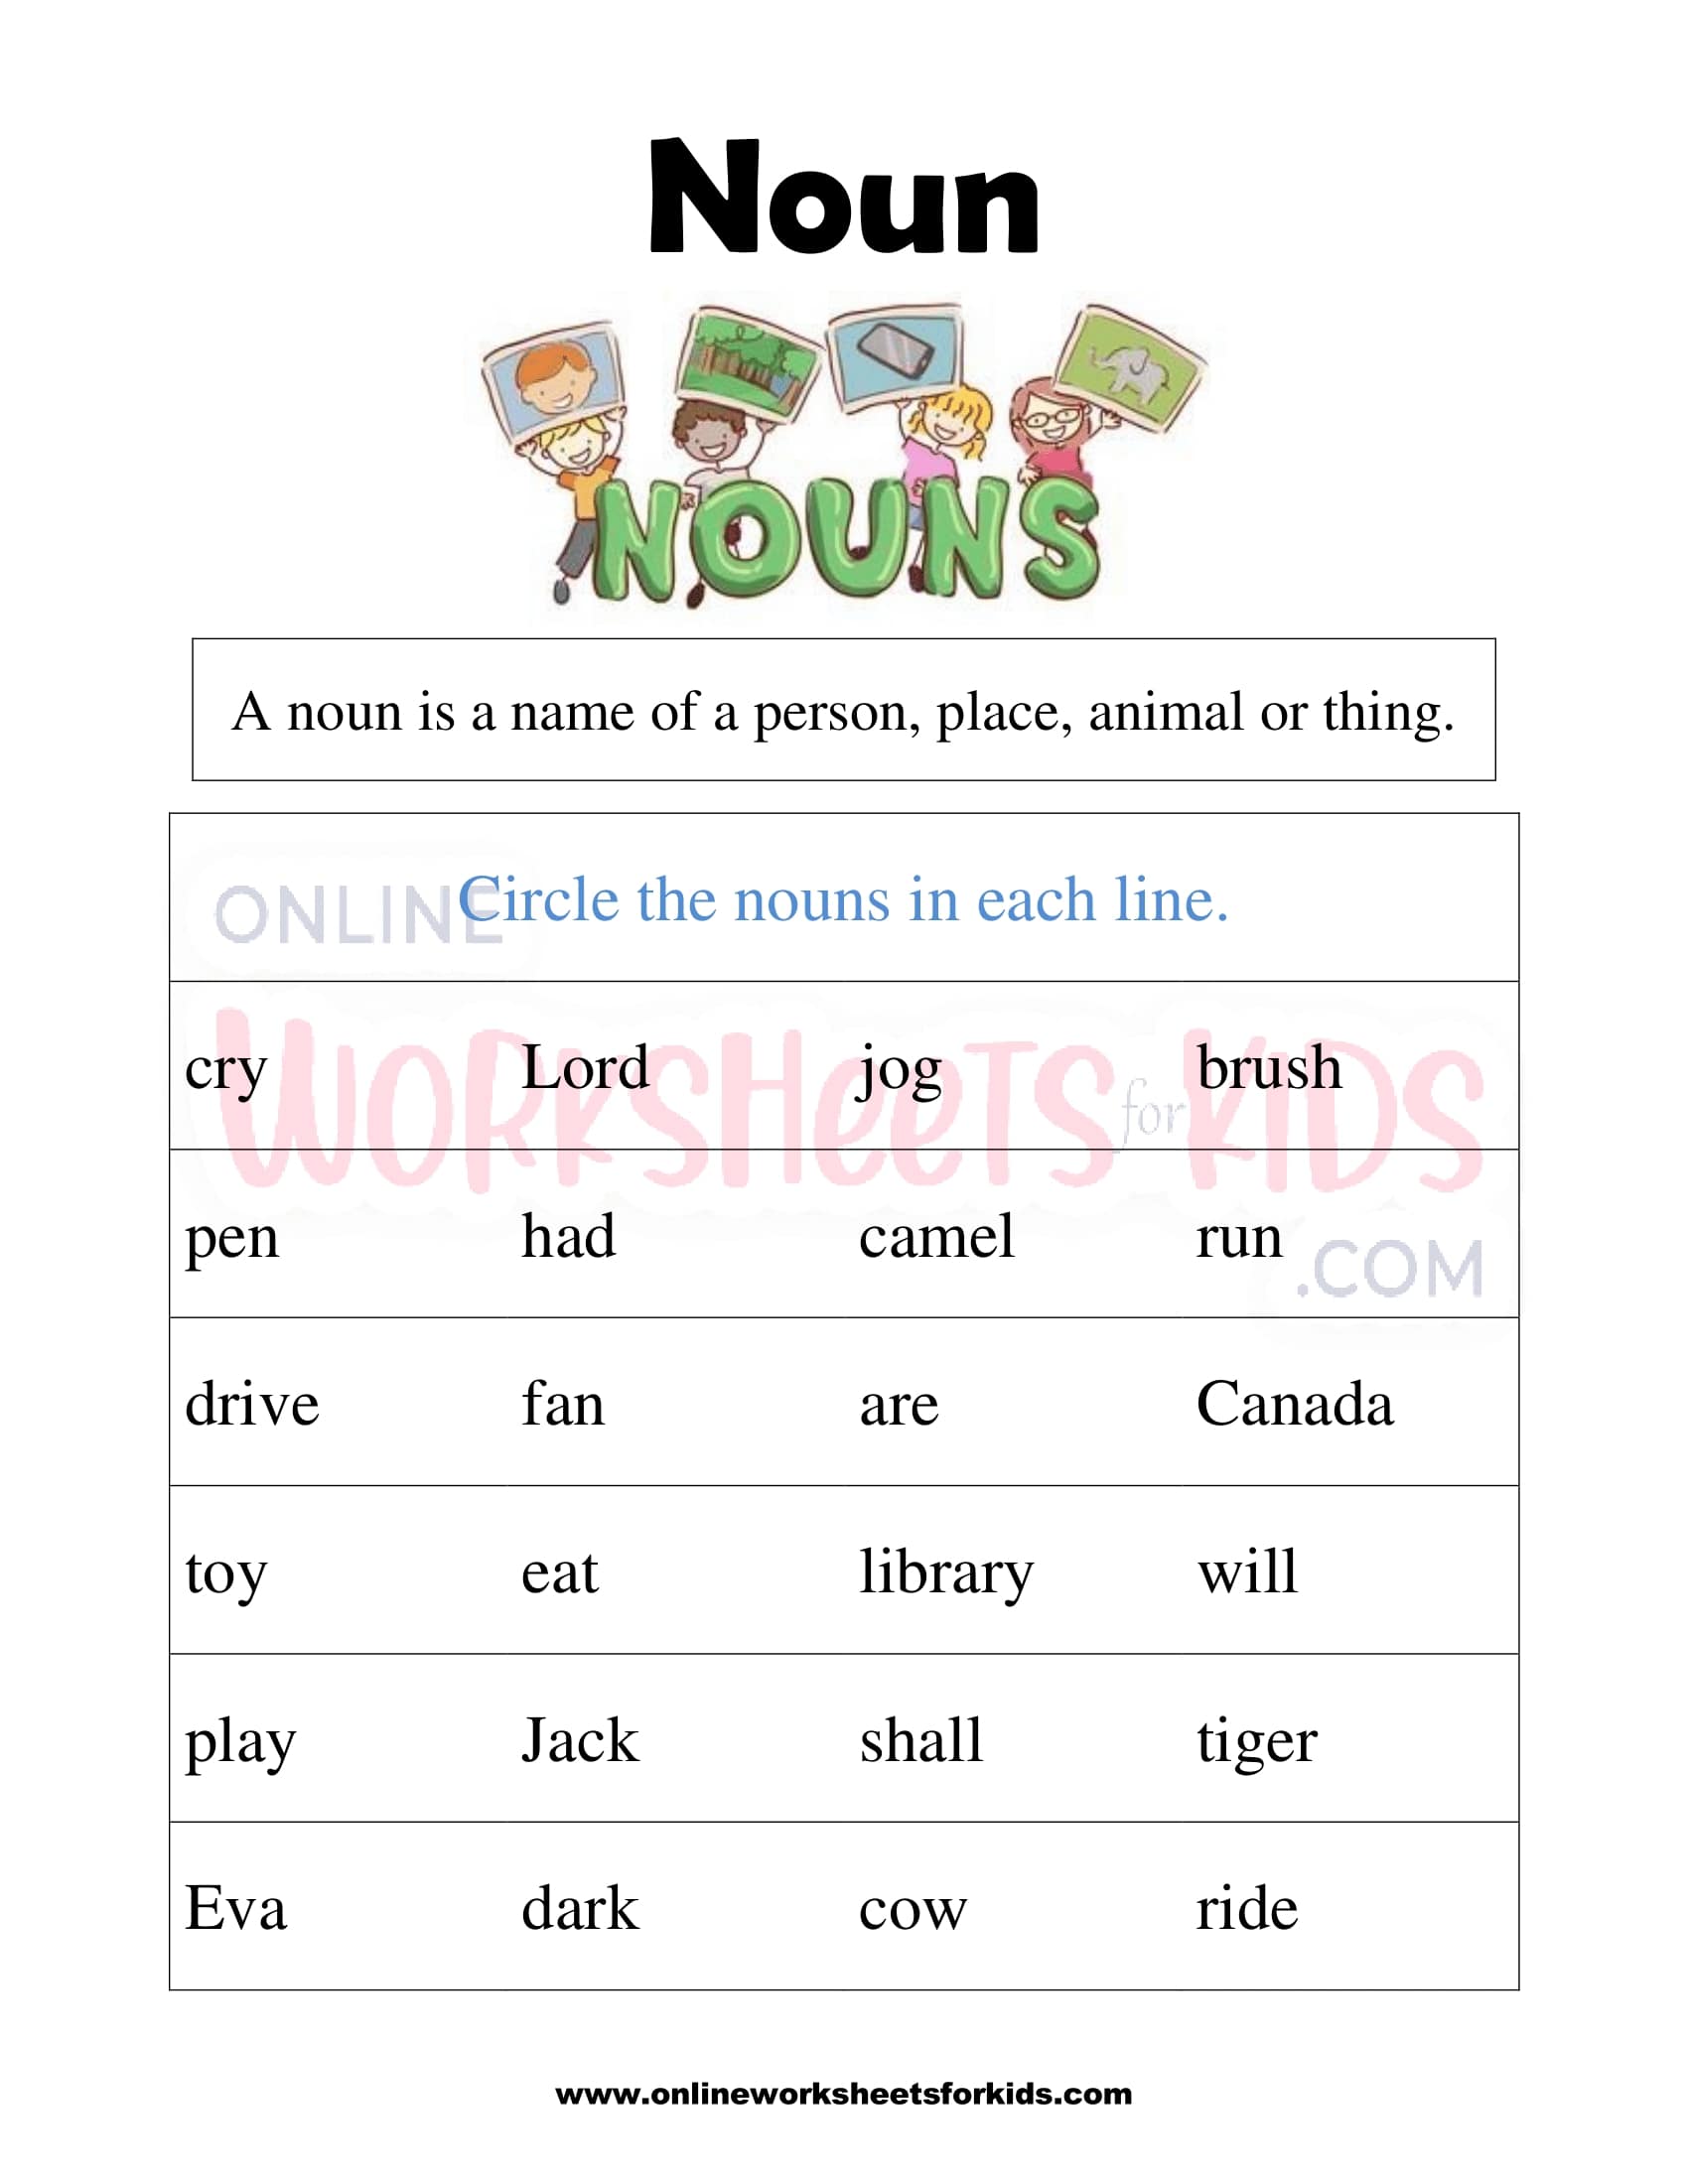 noun-worksheets-for-grade-1-4